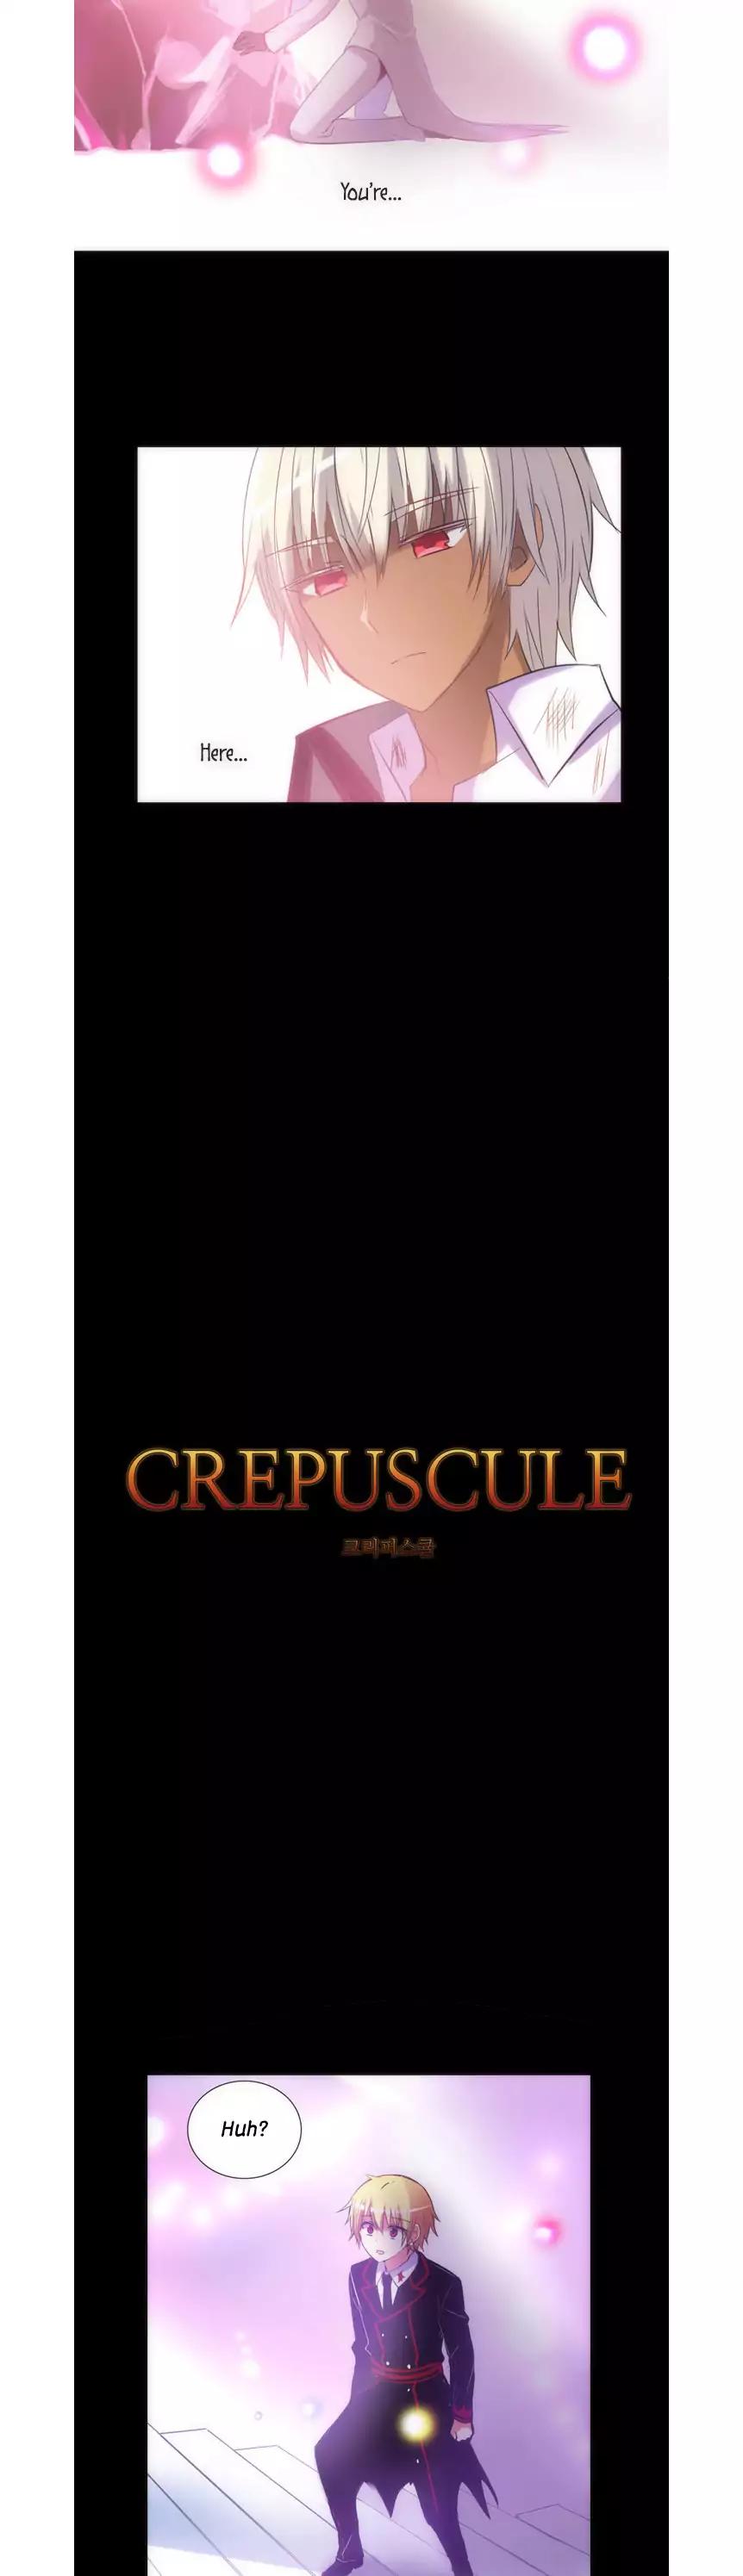 Crepuscule 214 4